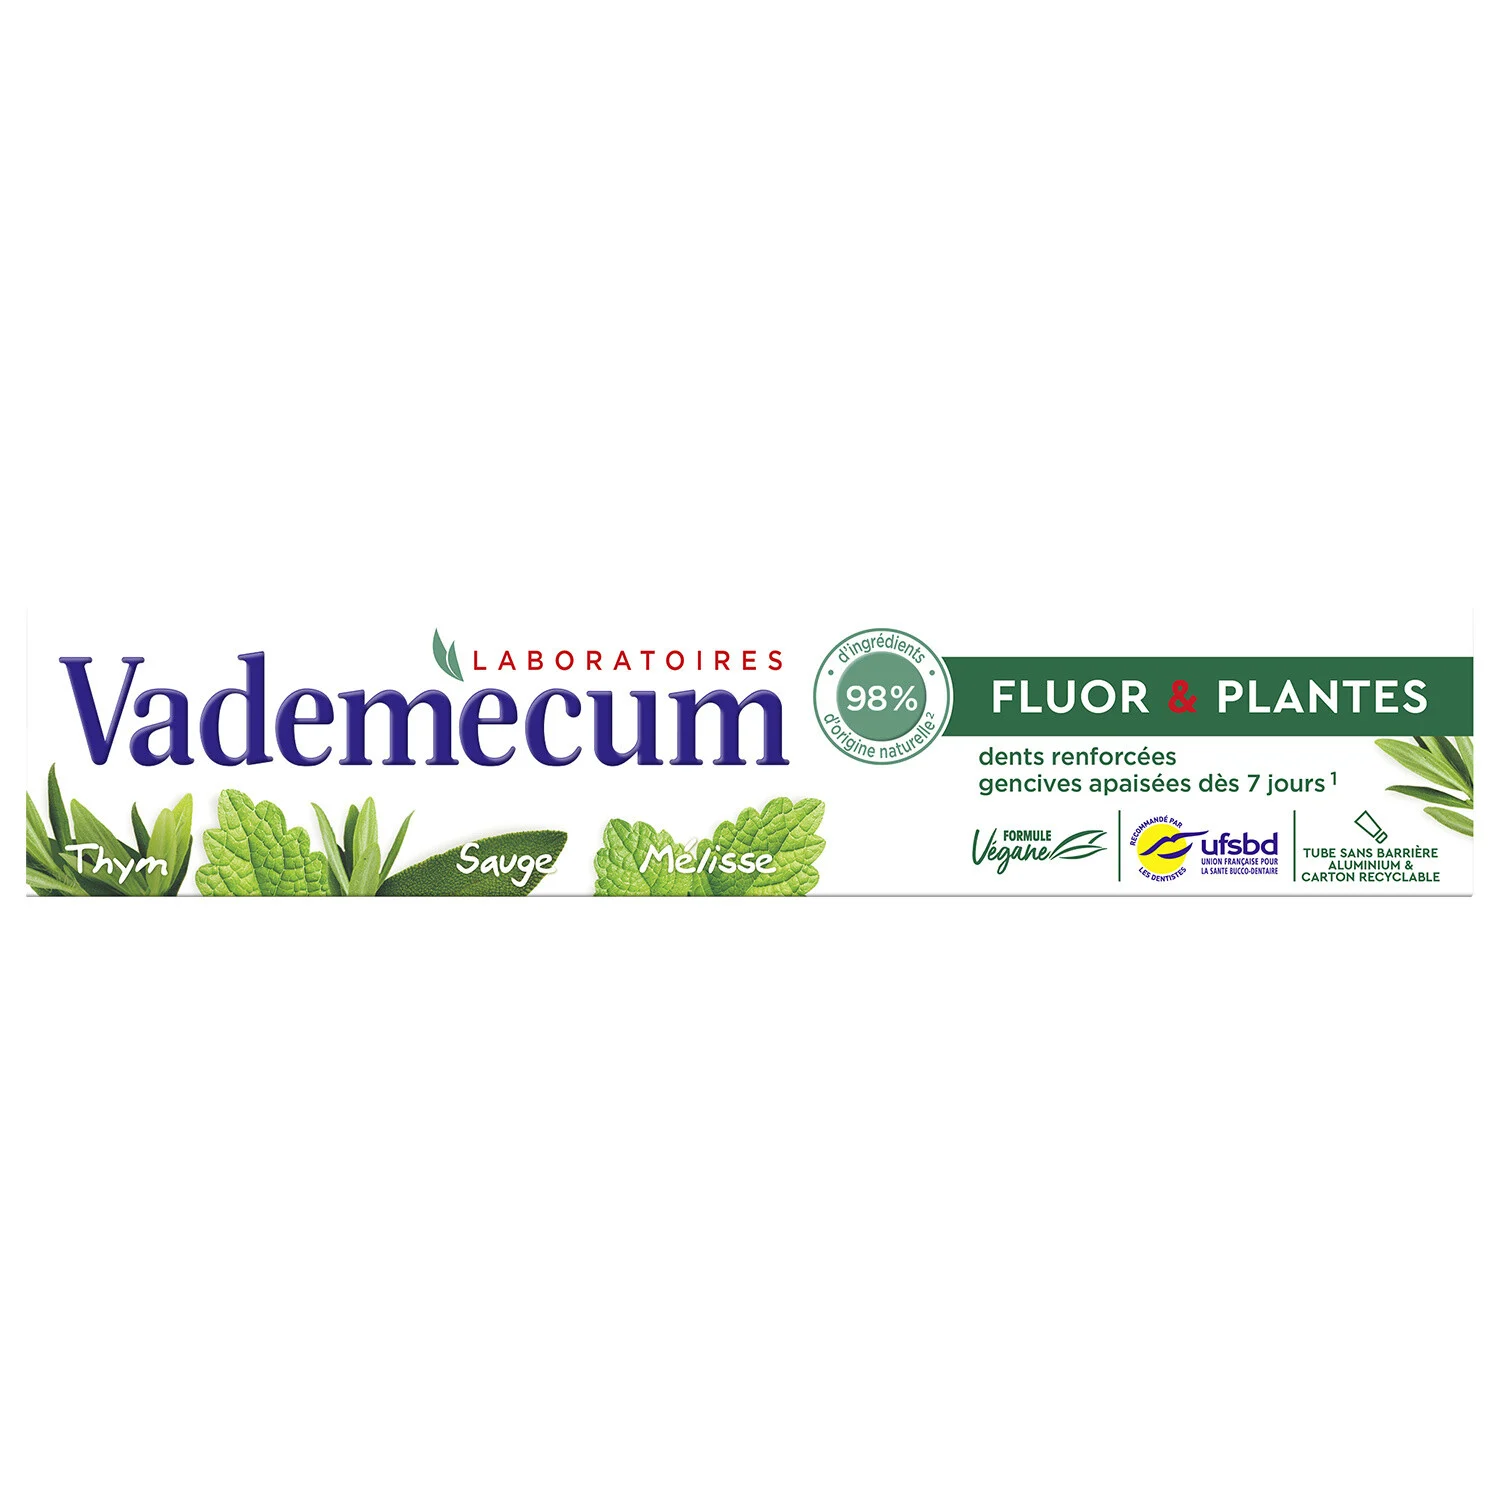 75ml Dent Fluor Plant Vademecu